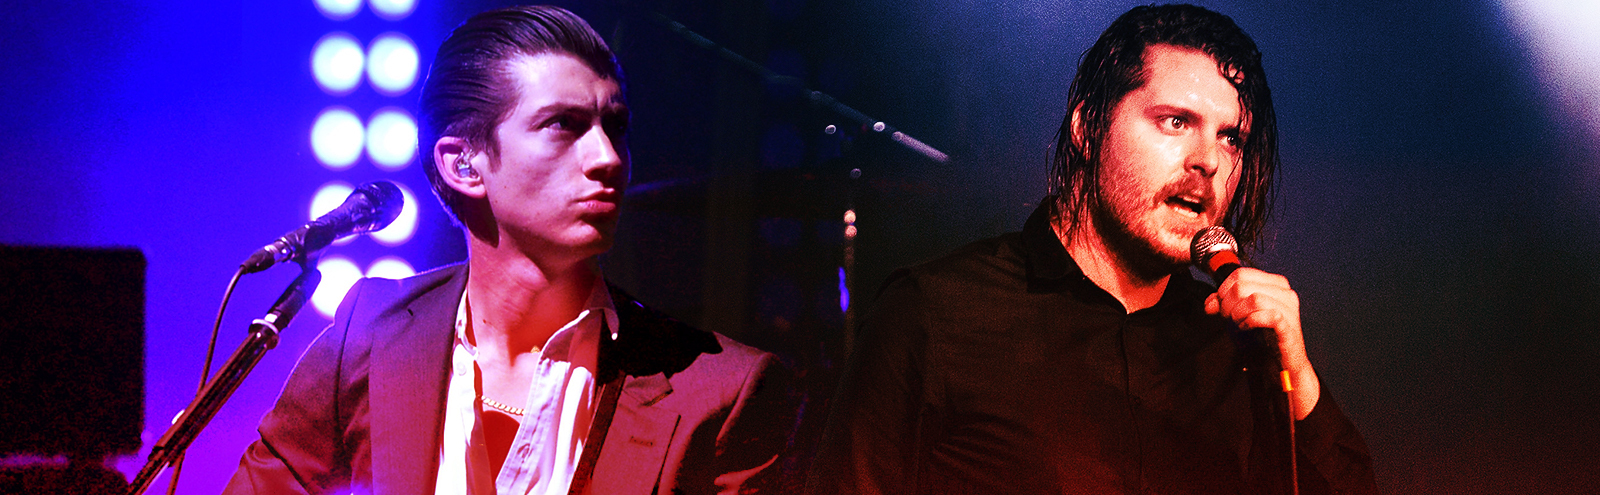 Arctic Monkeys Deafheaven indie-tf-uproxx.jpg